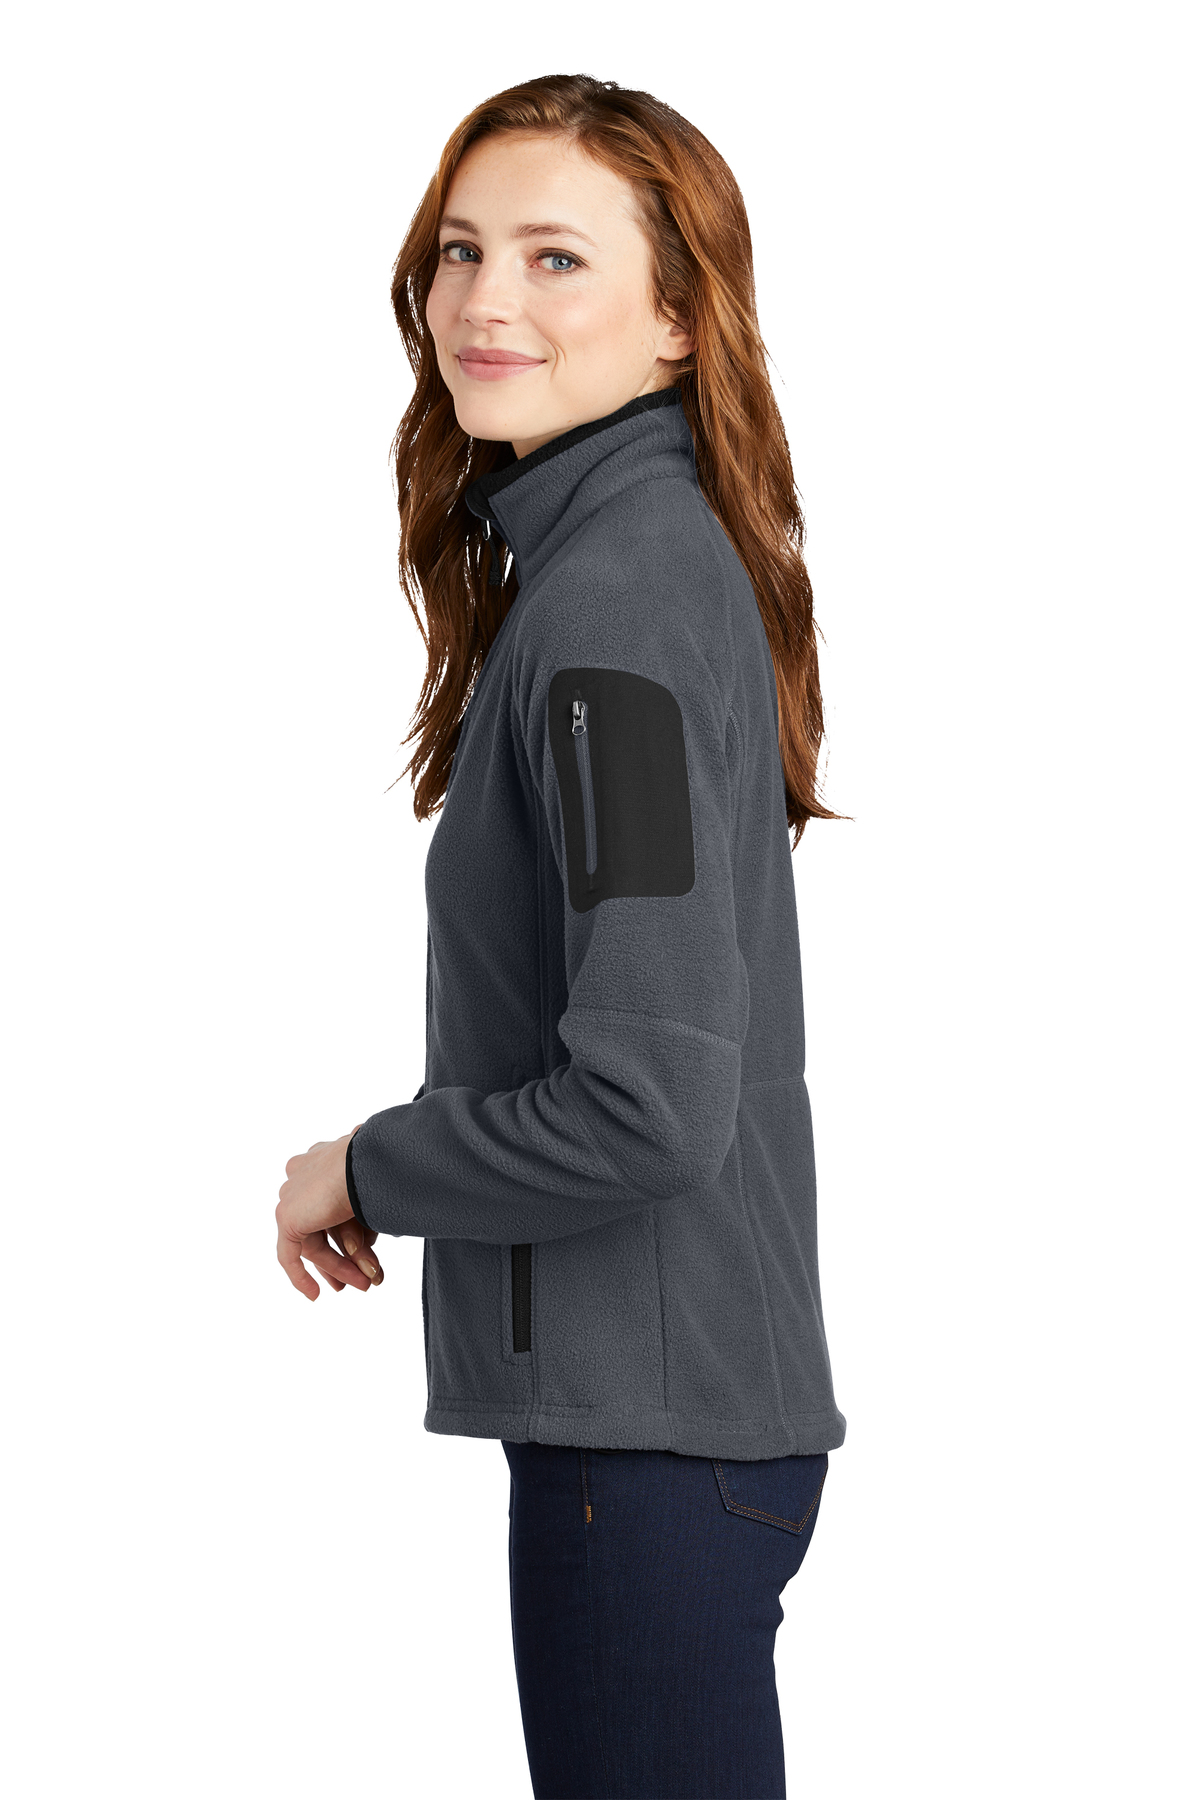 Port Authority Ladies Enhanced Fleece Full-Zip | Authority Port Product Jacket | Value